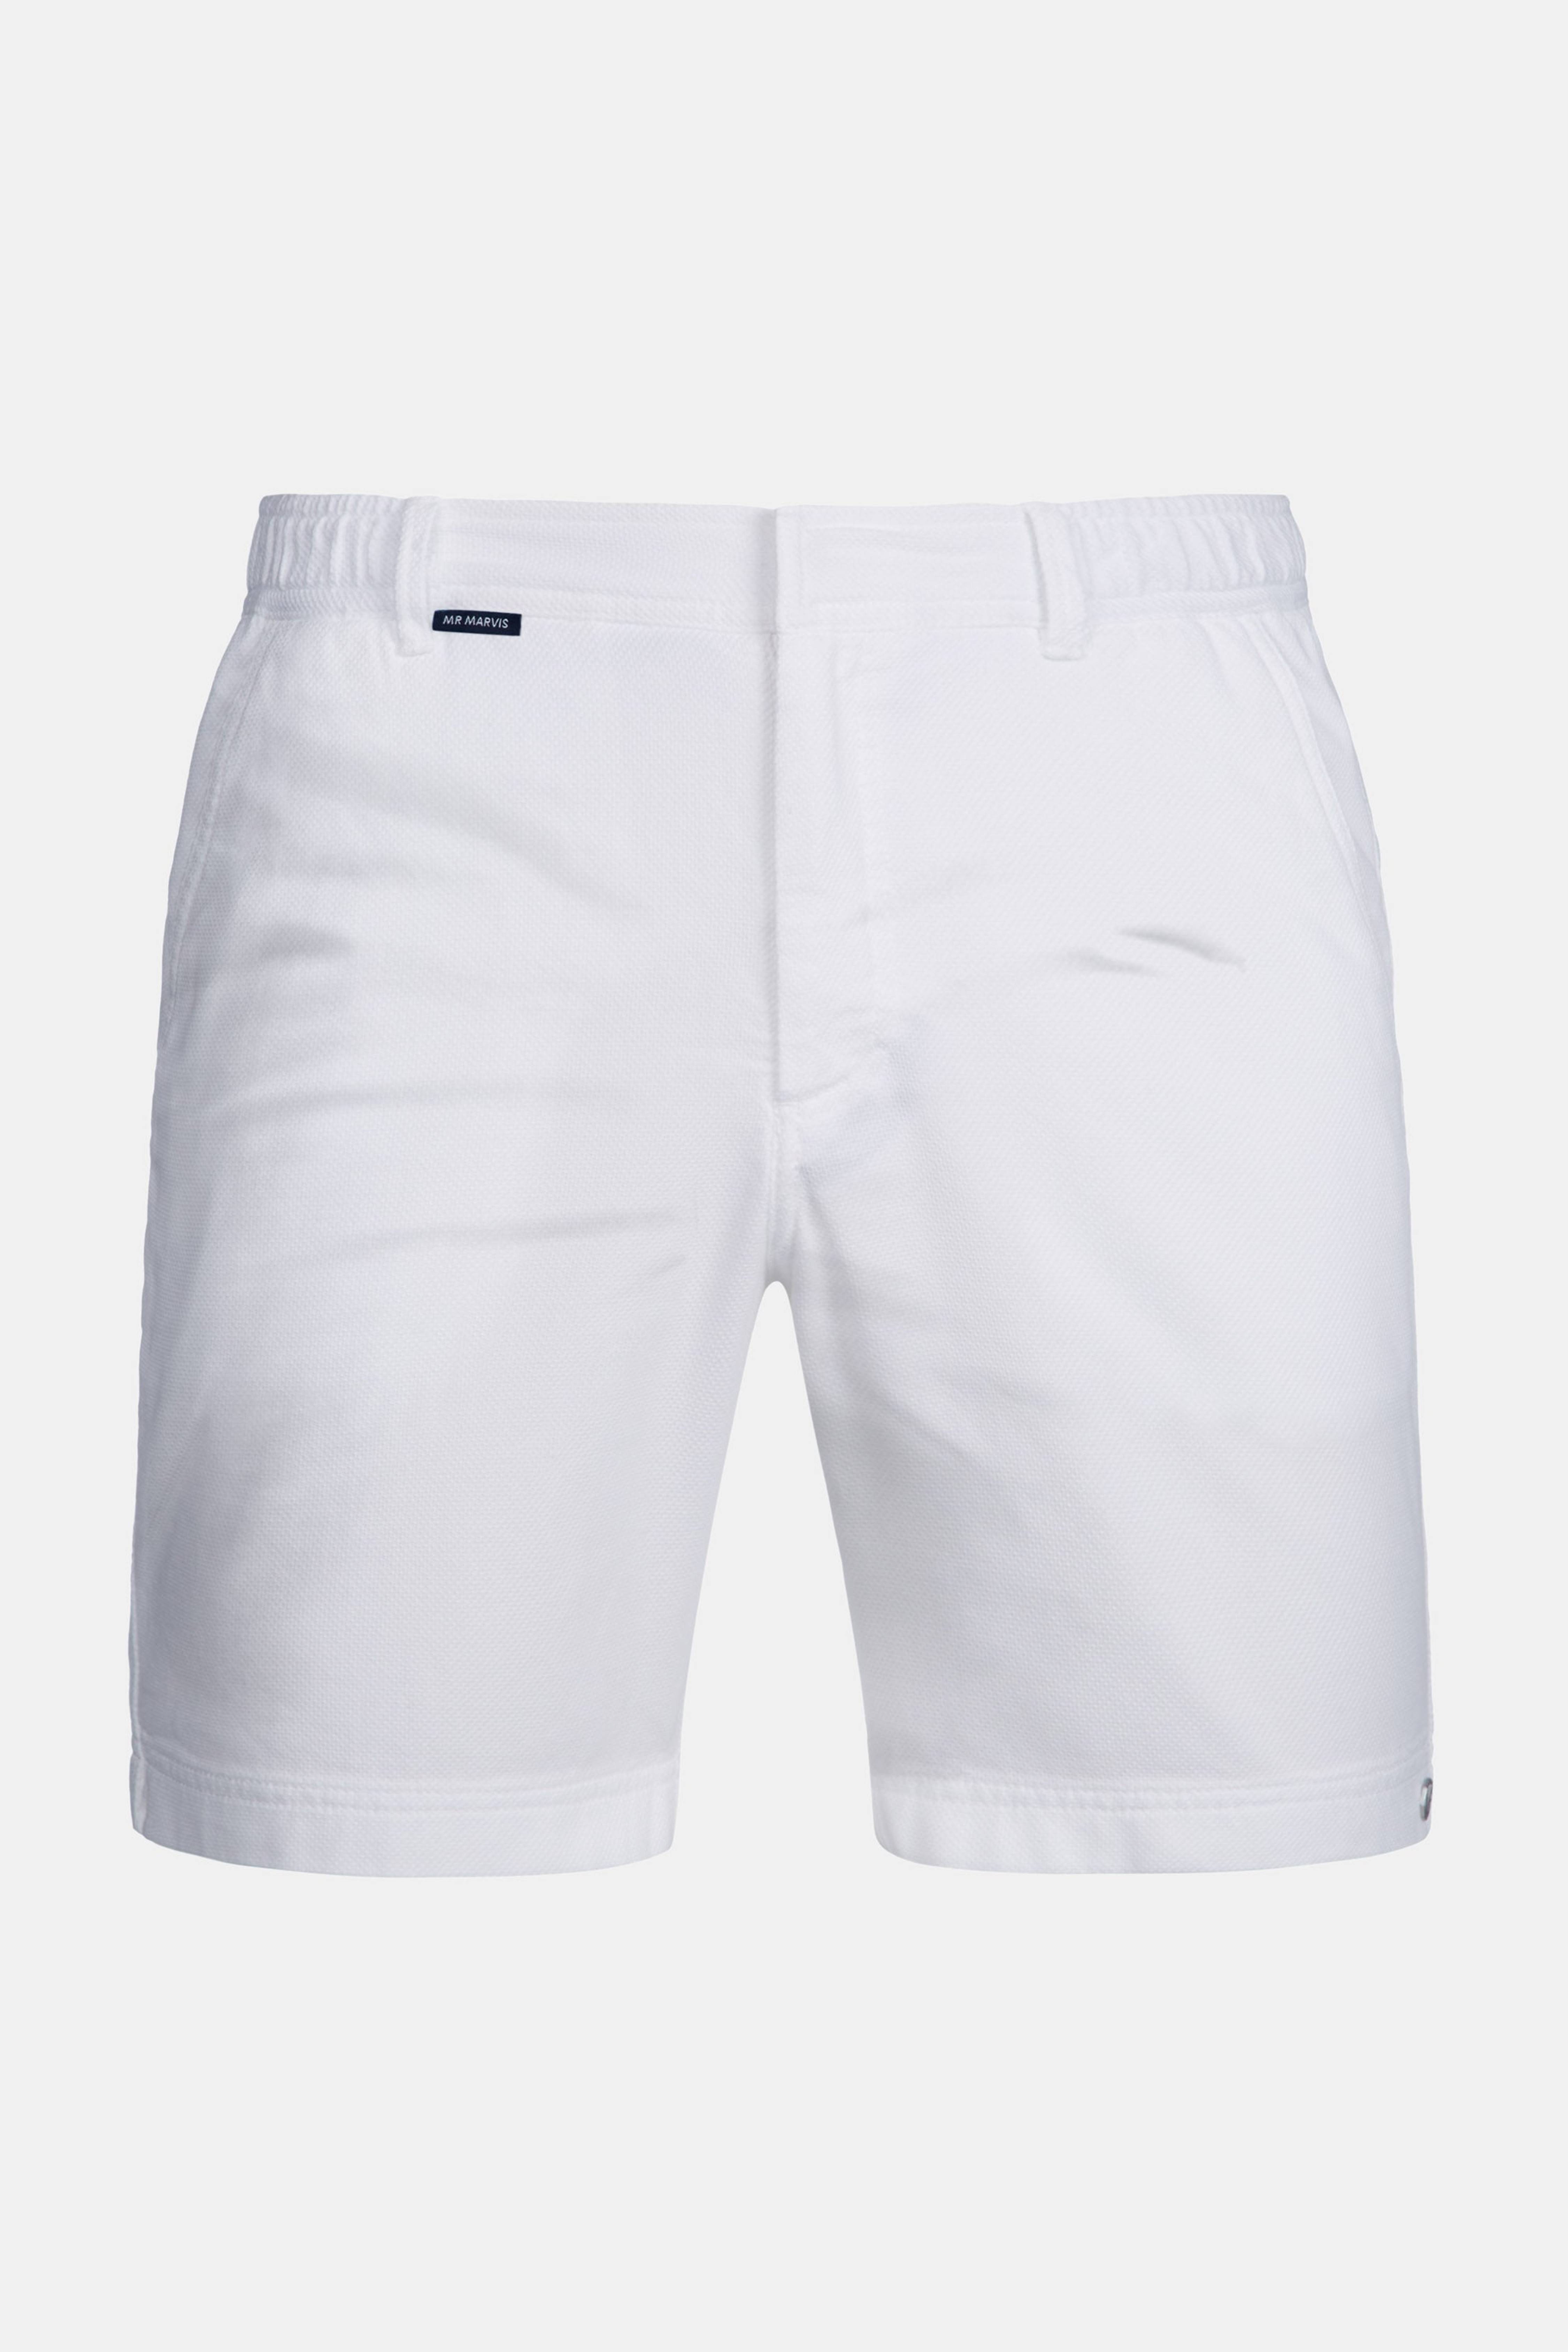 Wimbledons - Die Piqué Shorts